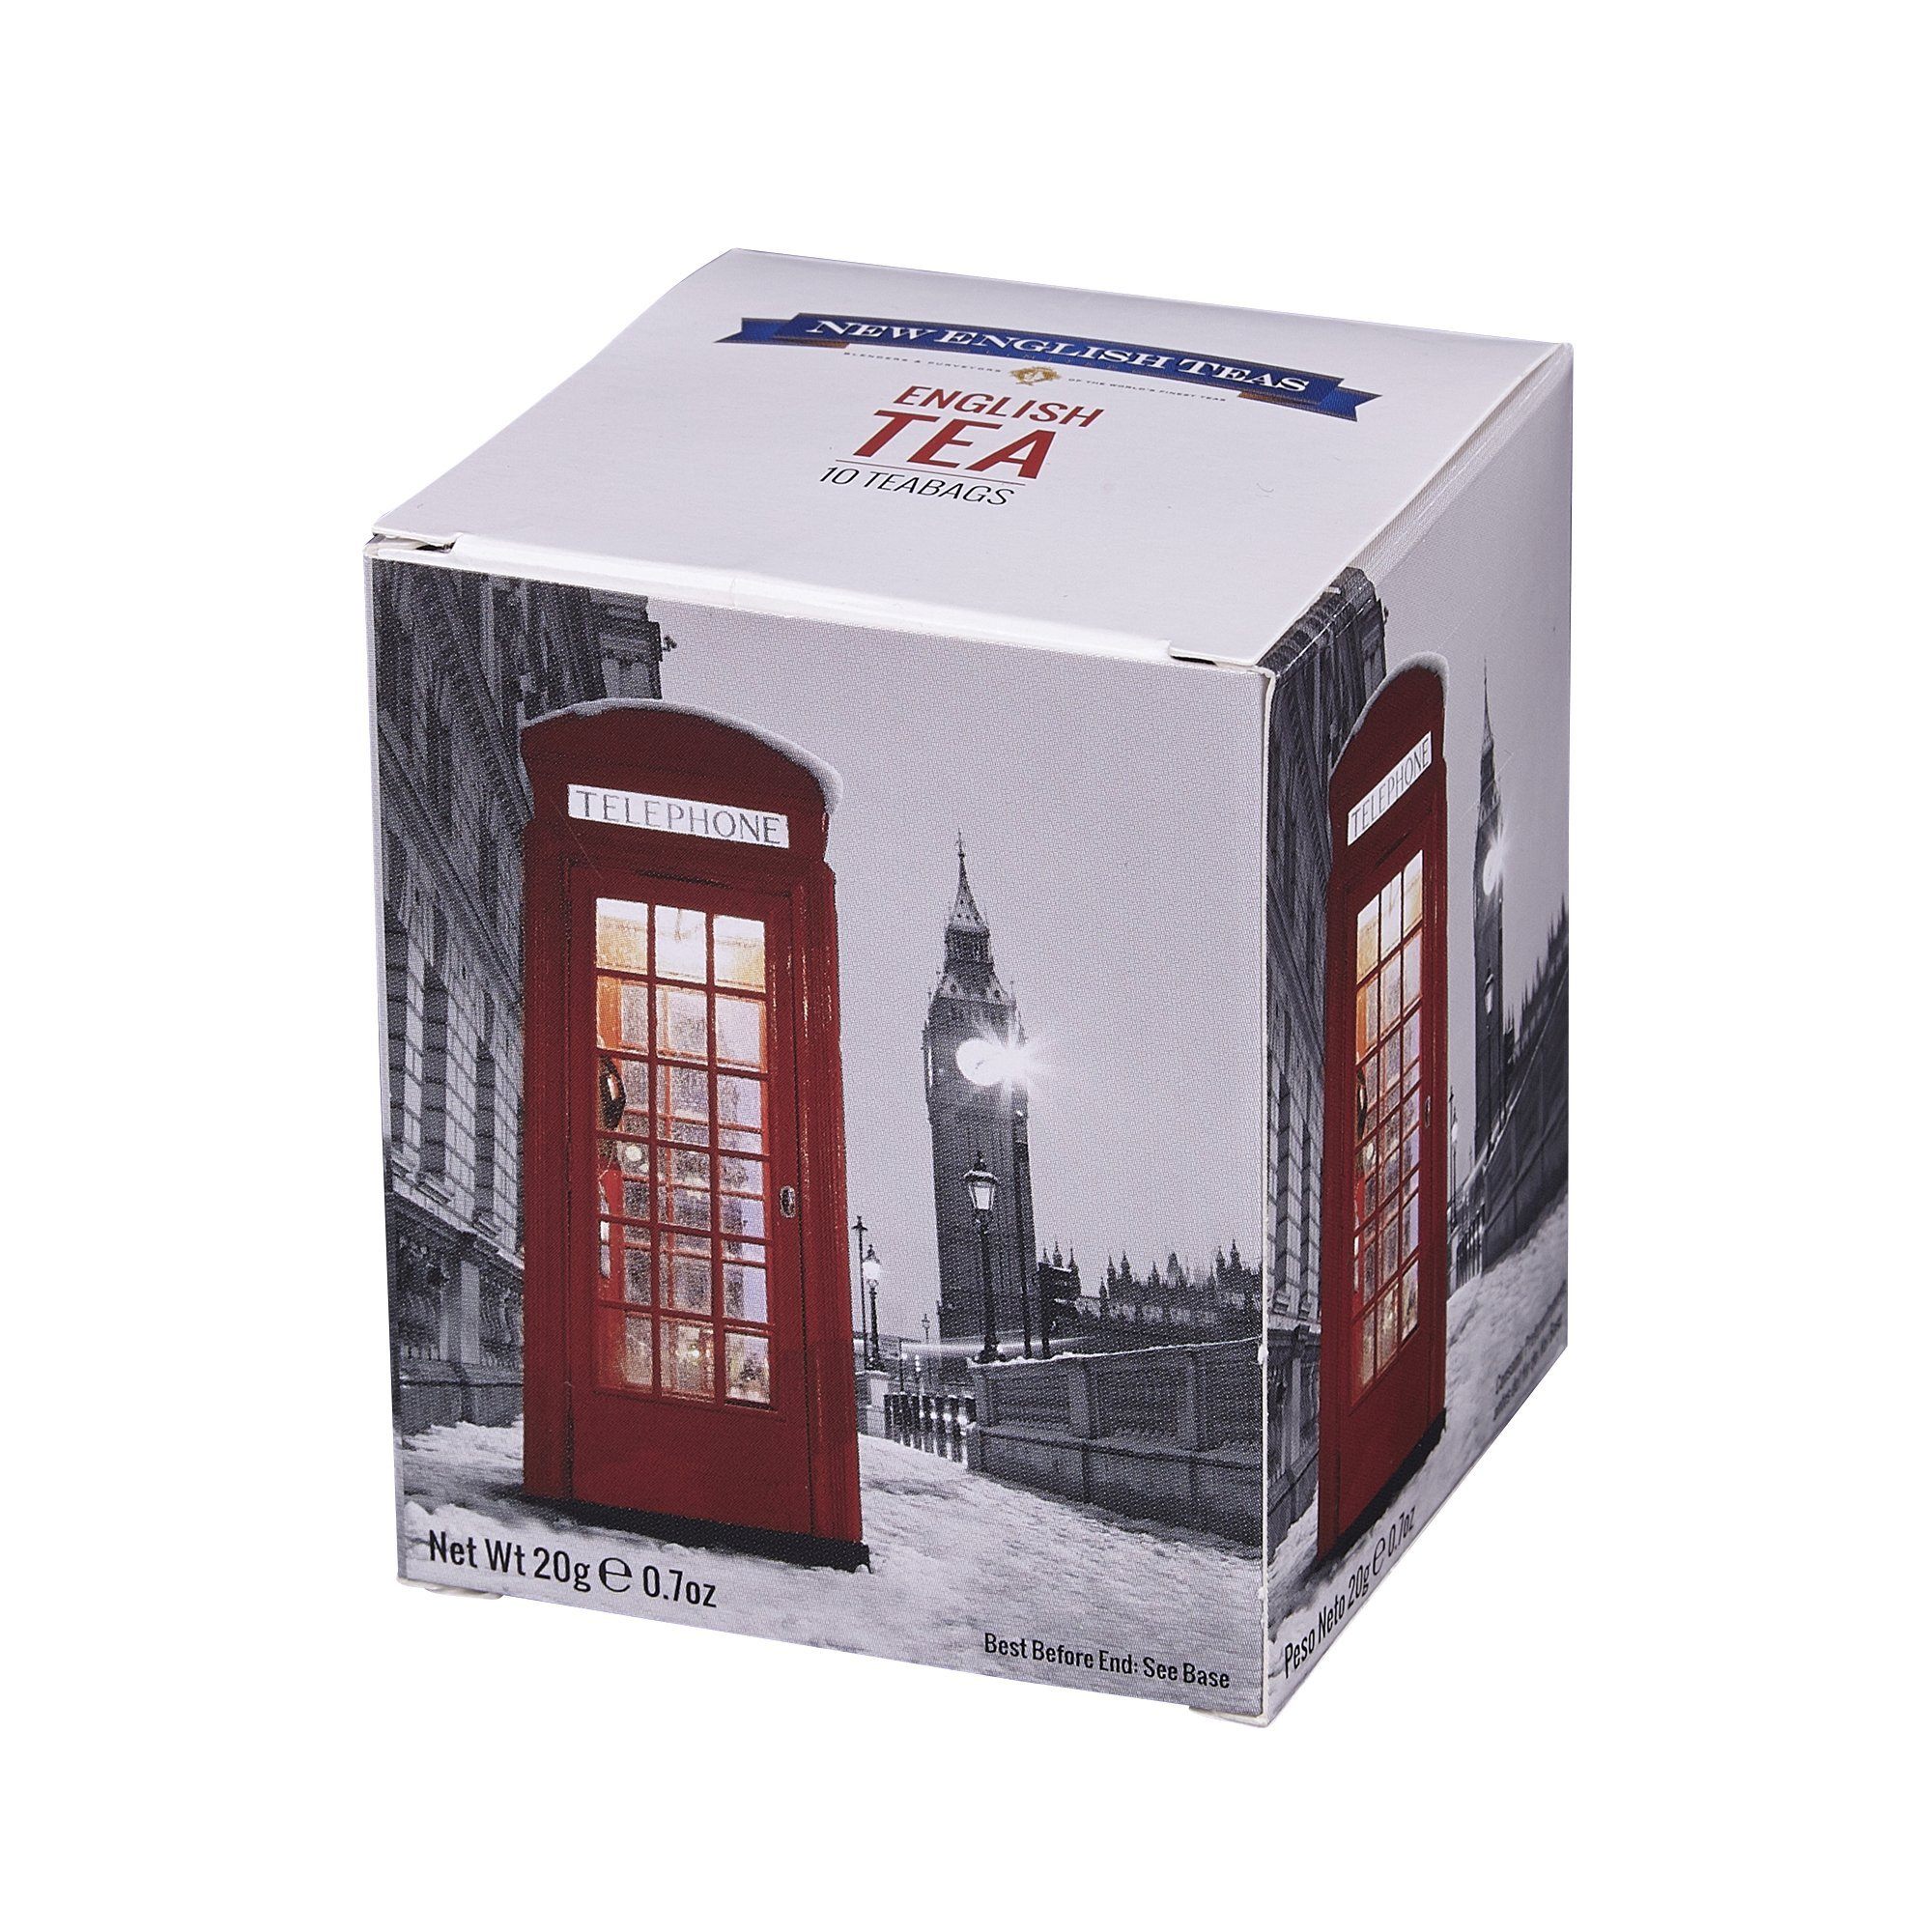 English Telephone Box Snow Scene Breakfast Tea 10 Teabag Carton Black Tea New English Teas 